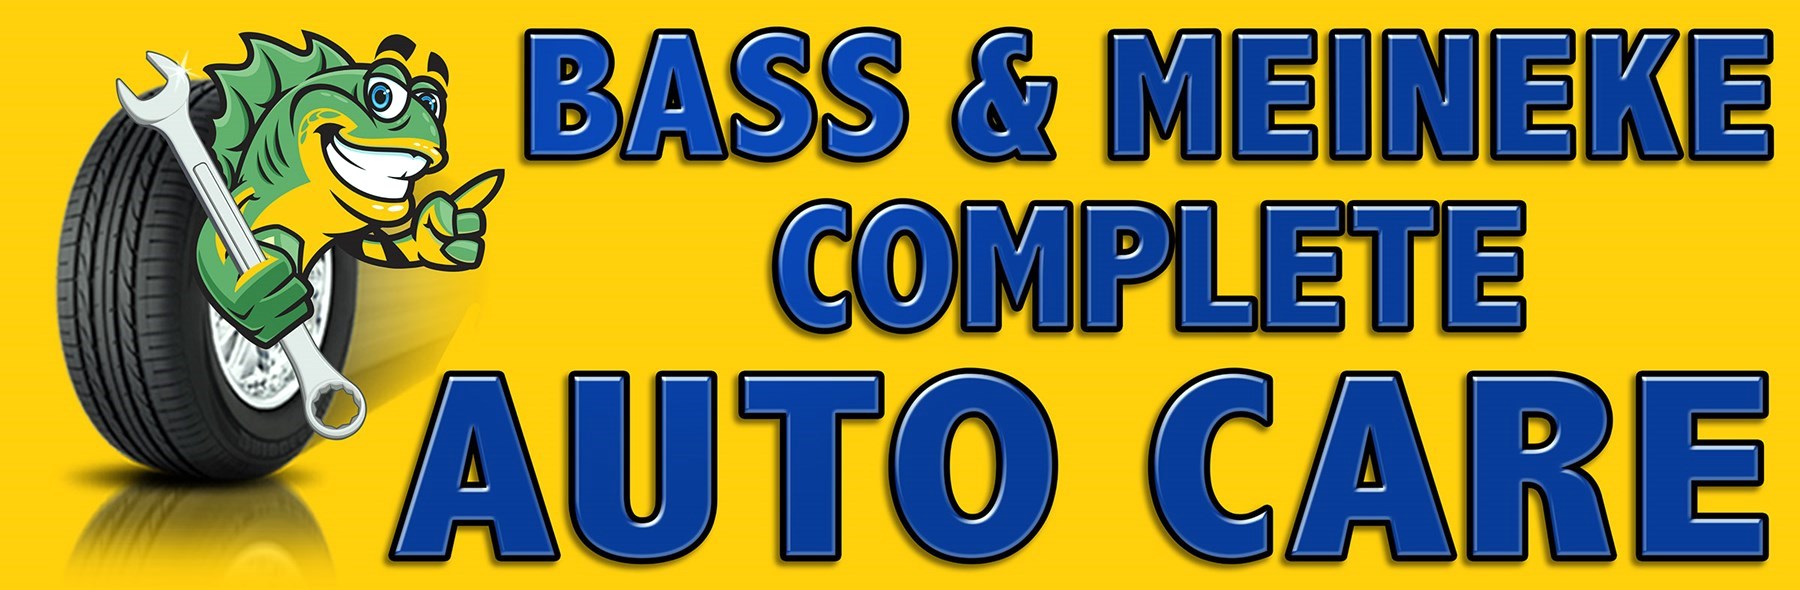 Bass & Meineke Complete Auto Care